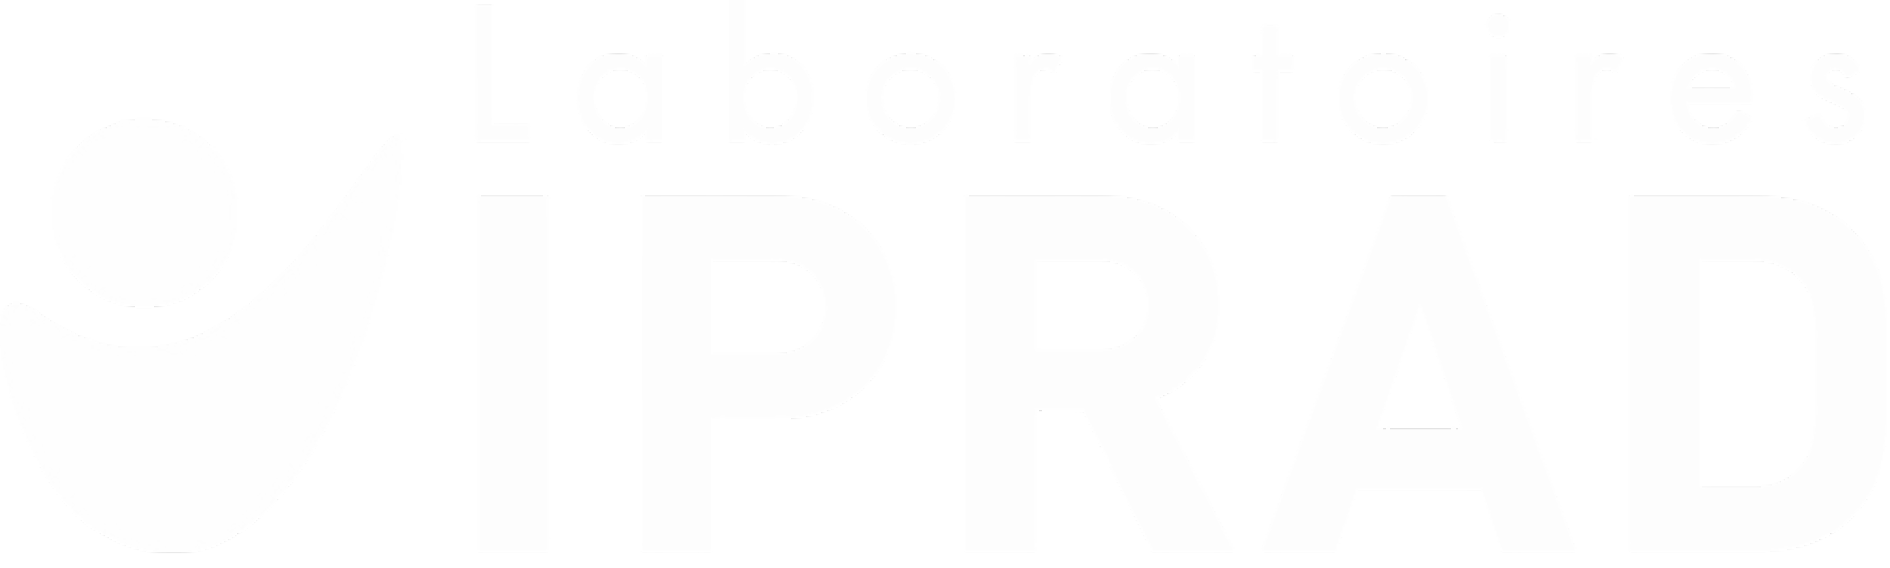 Iprad logo